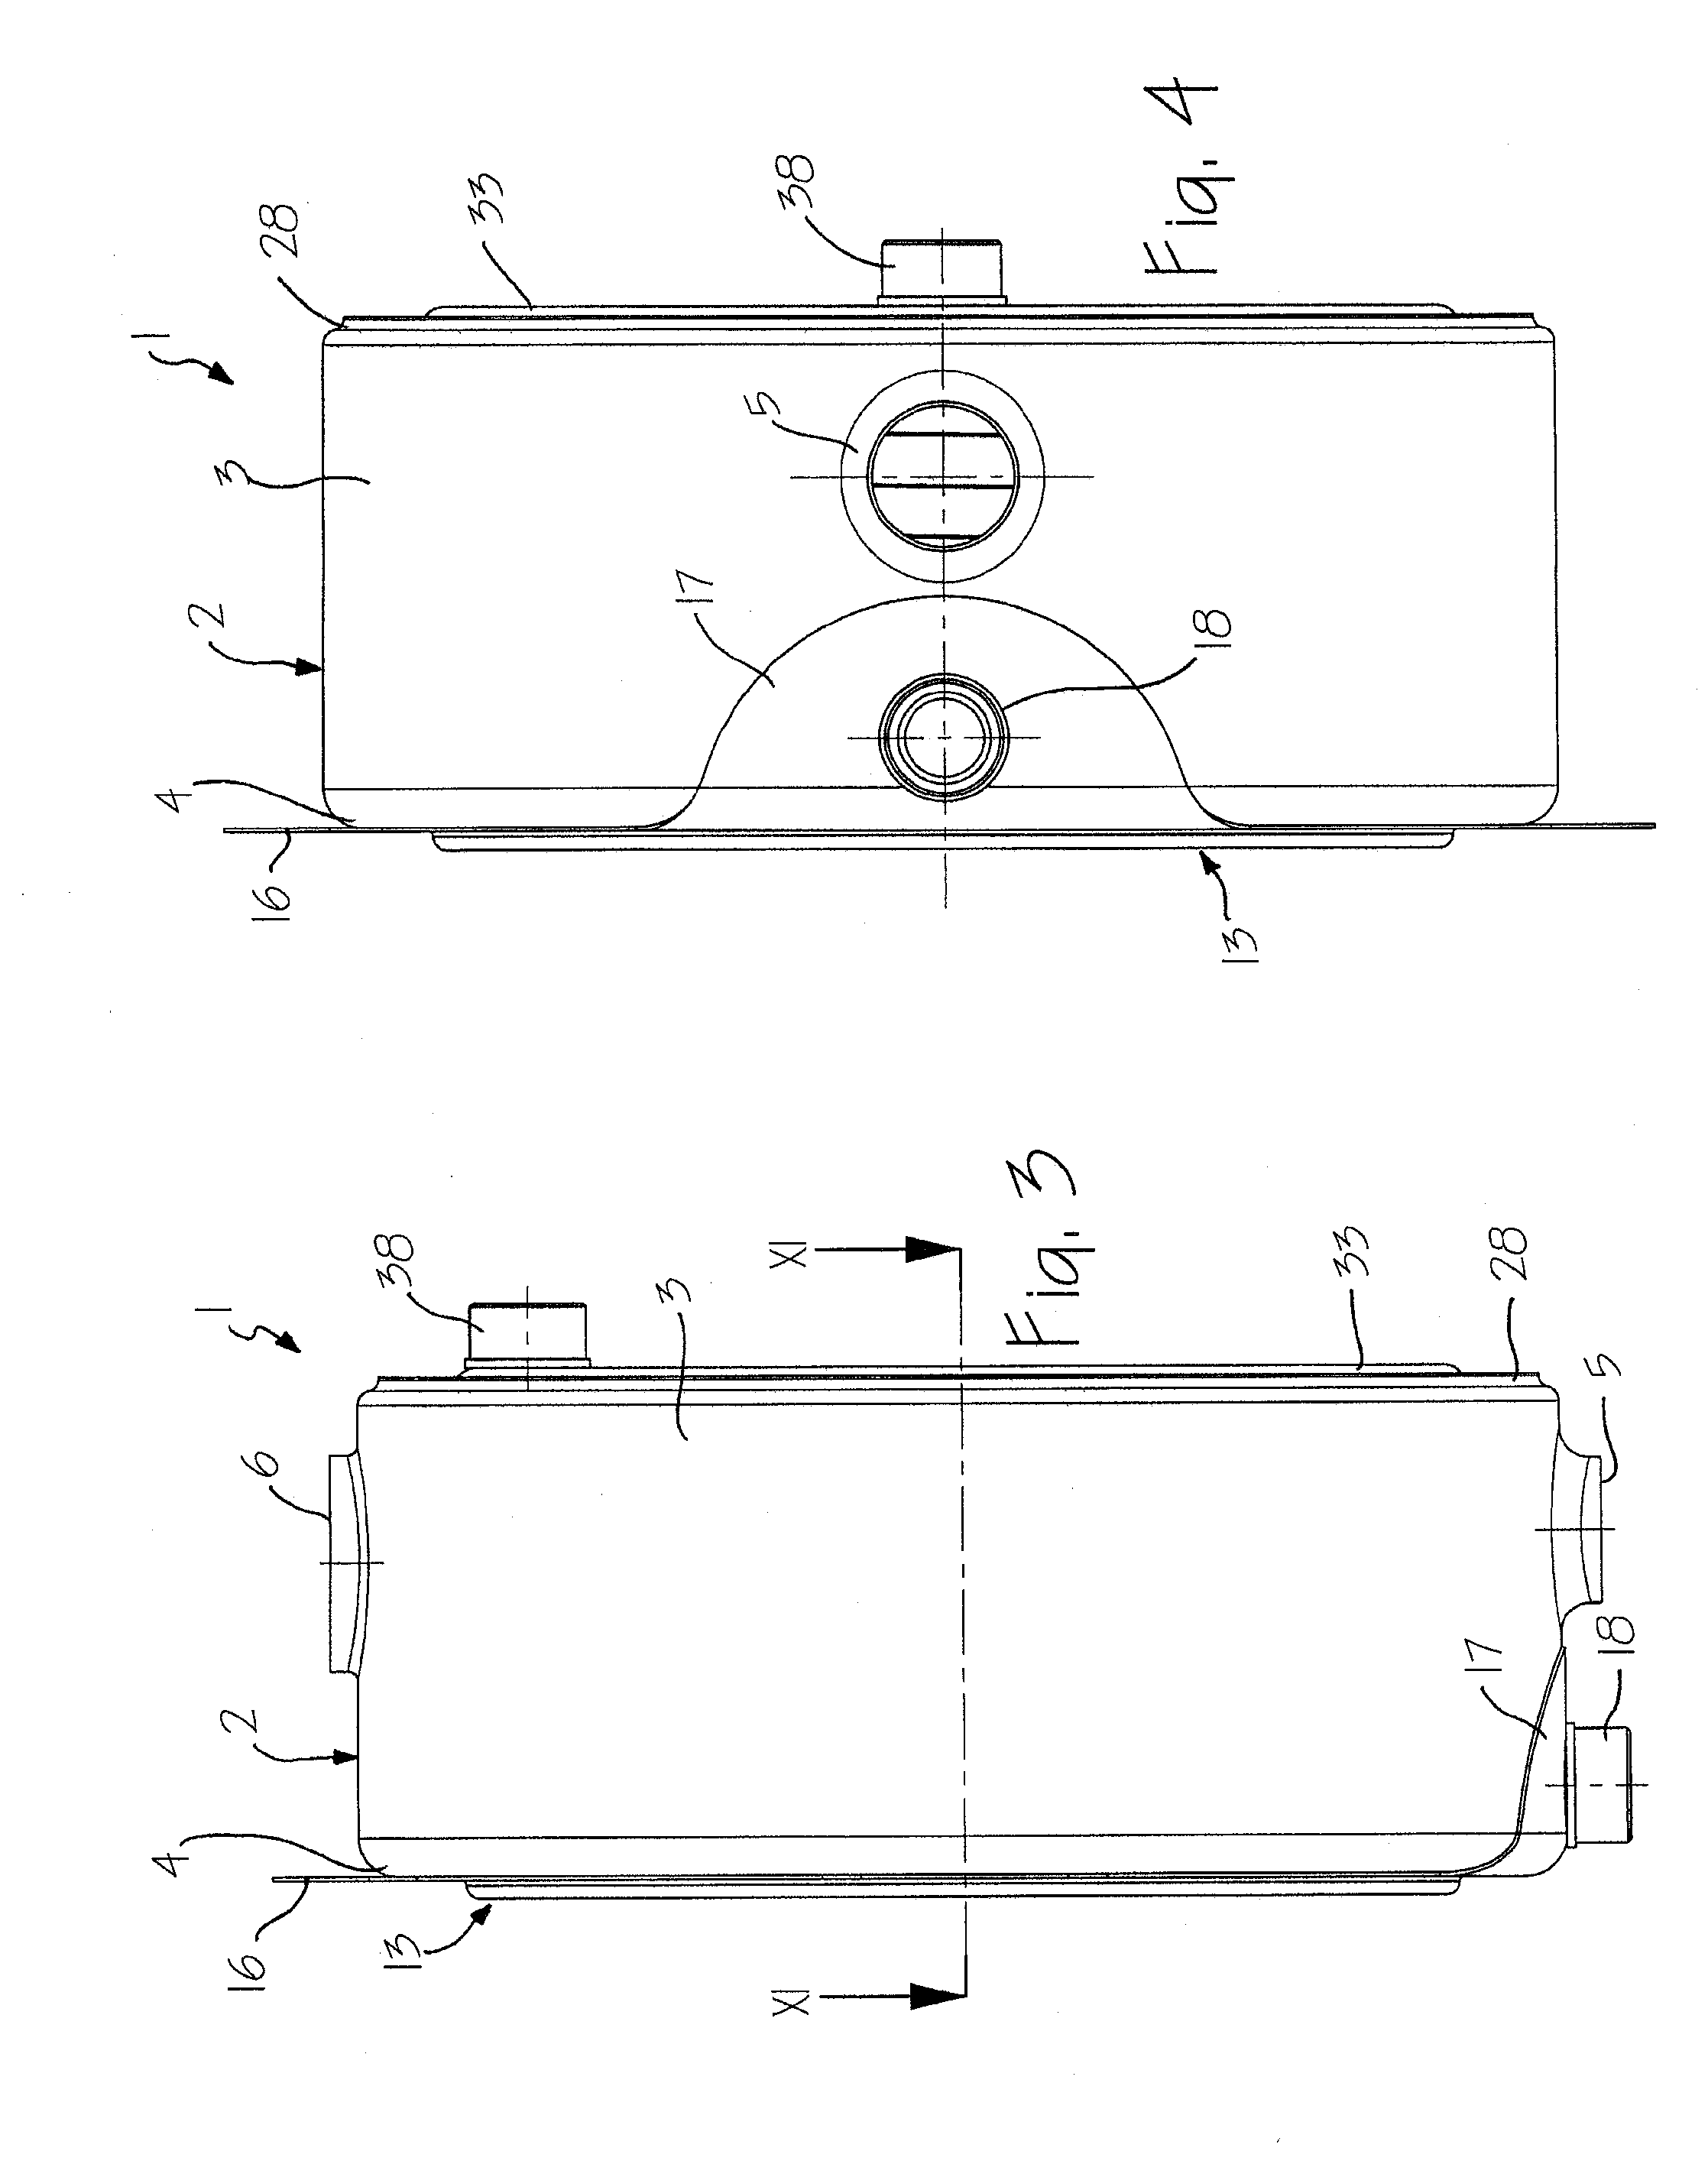 Heat exchanger, in particular of the condensation type